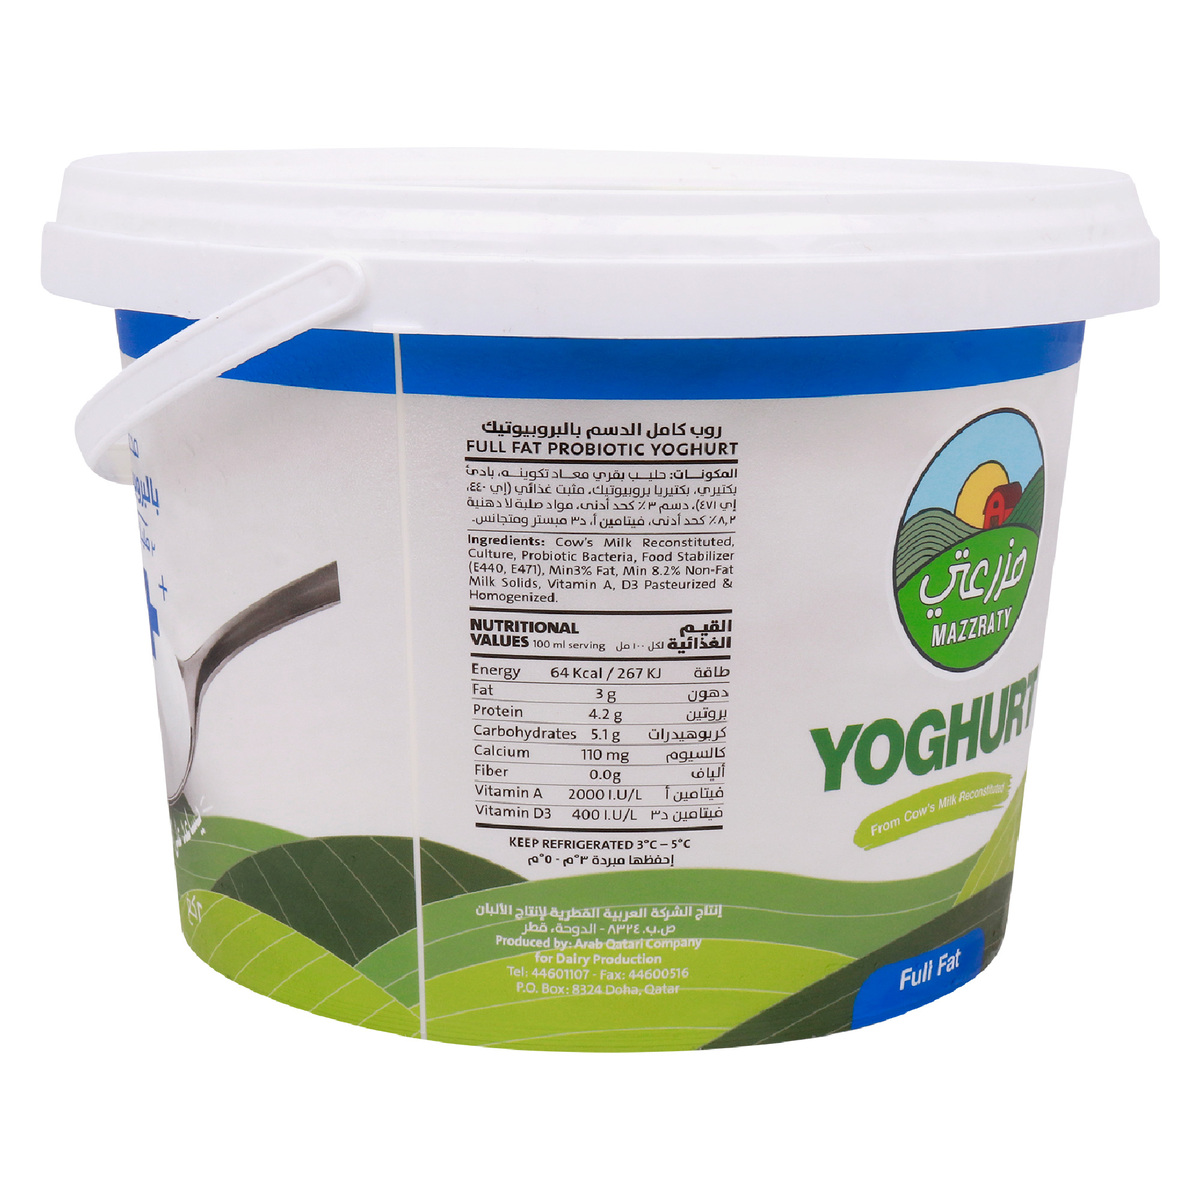 Mazzraty Full Fat Probiotics Yoghurt 2kg